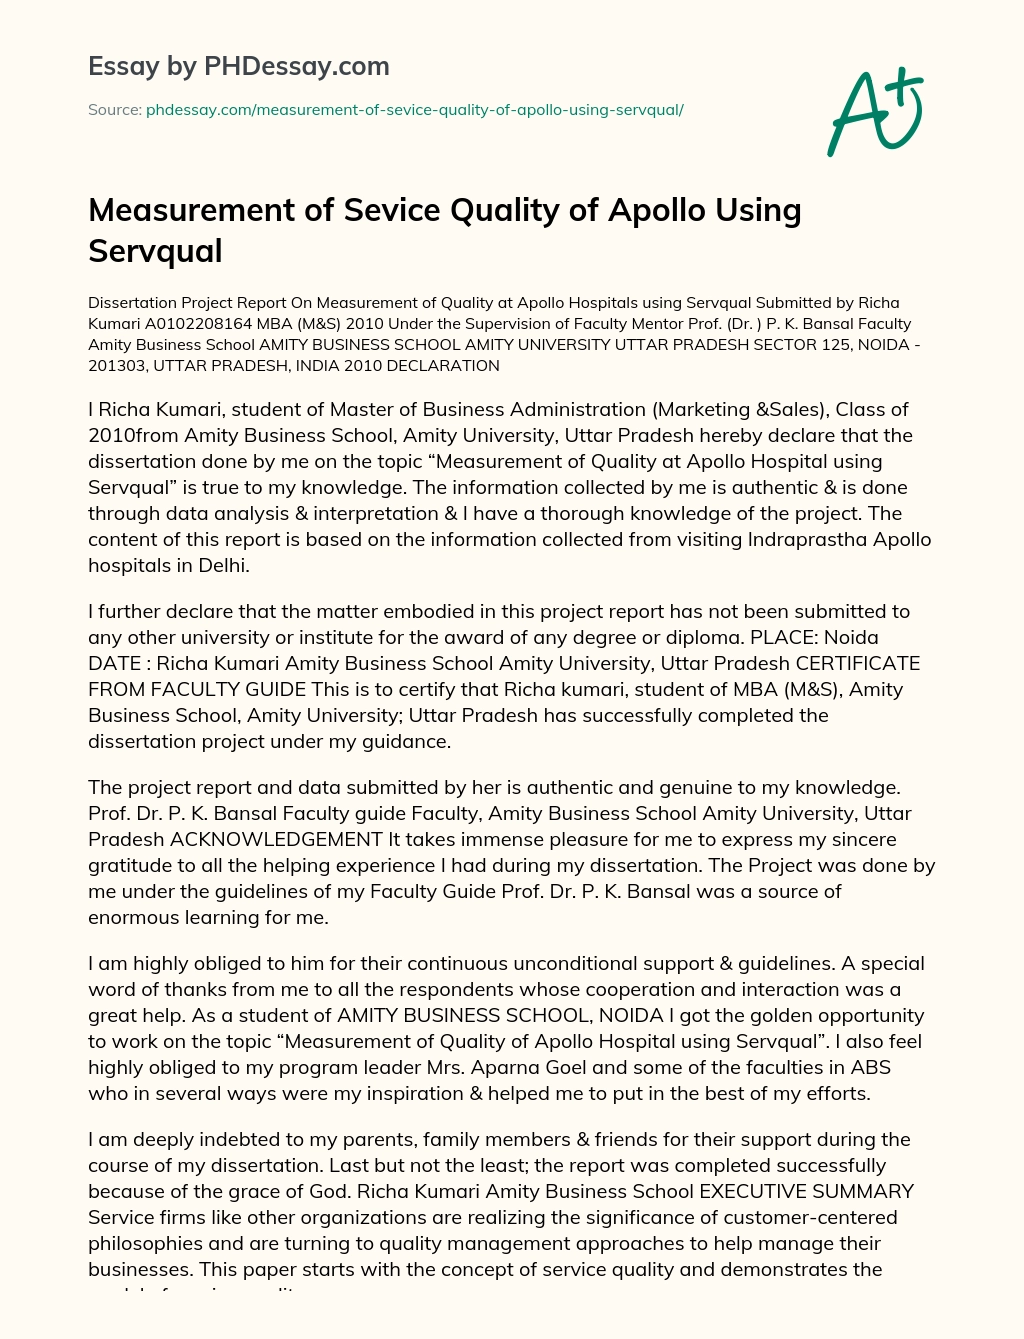 Measurement of Sevice Quality of Apollo Using Servqual essay